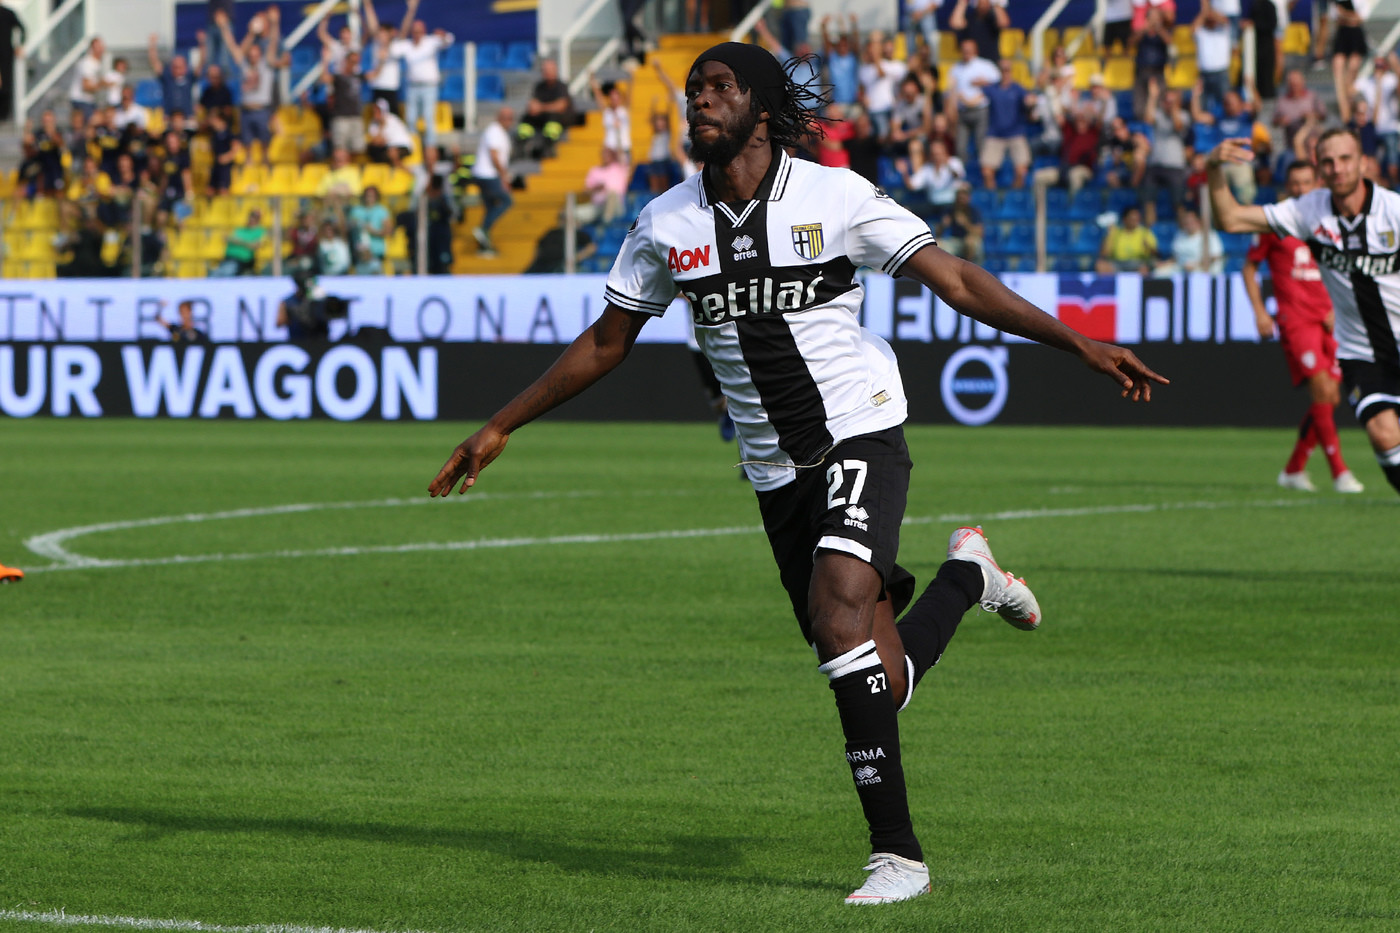 Serie A, Inglese e coast-to-coast Gervinho: Parma stende Cagliari